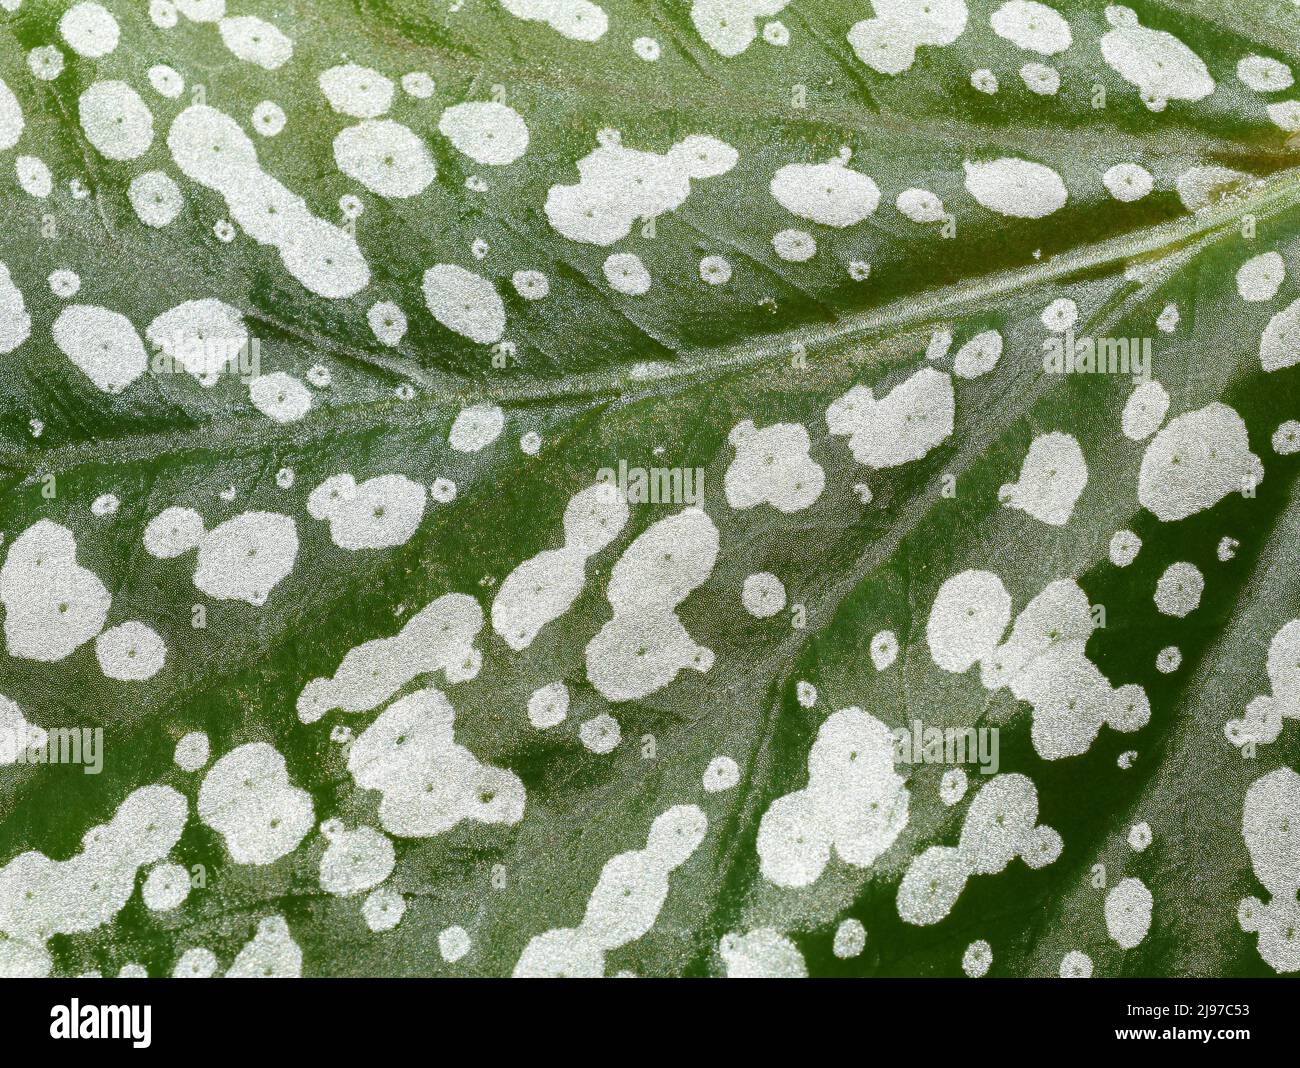 Begonia maculata polka dot Begonia angel wing silvery-white dotted leaf close up Stock Photo